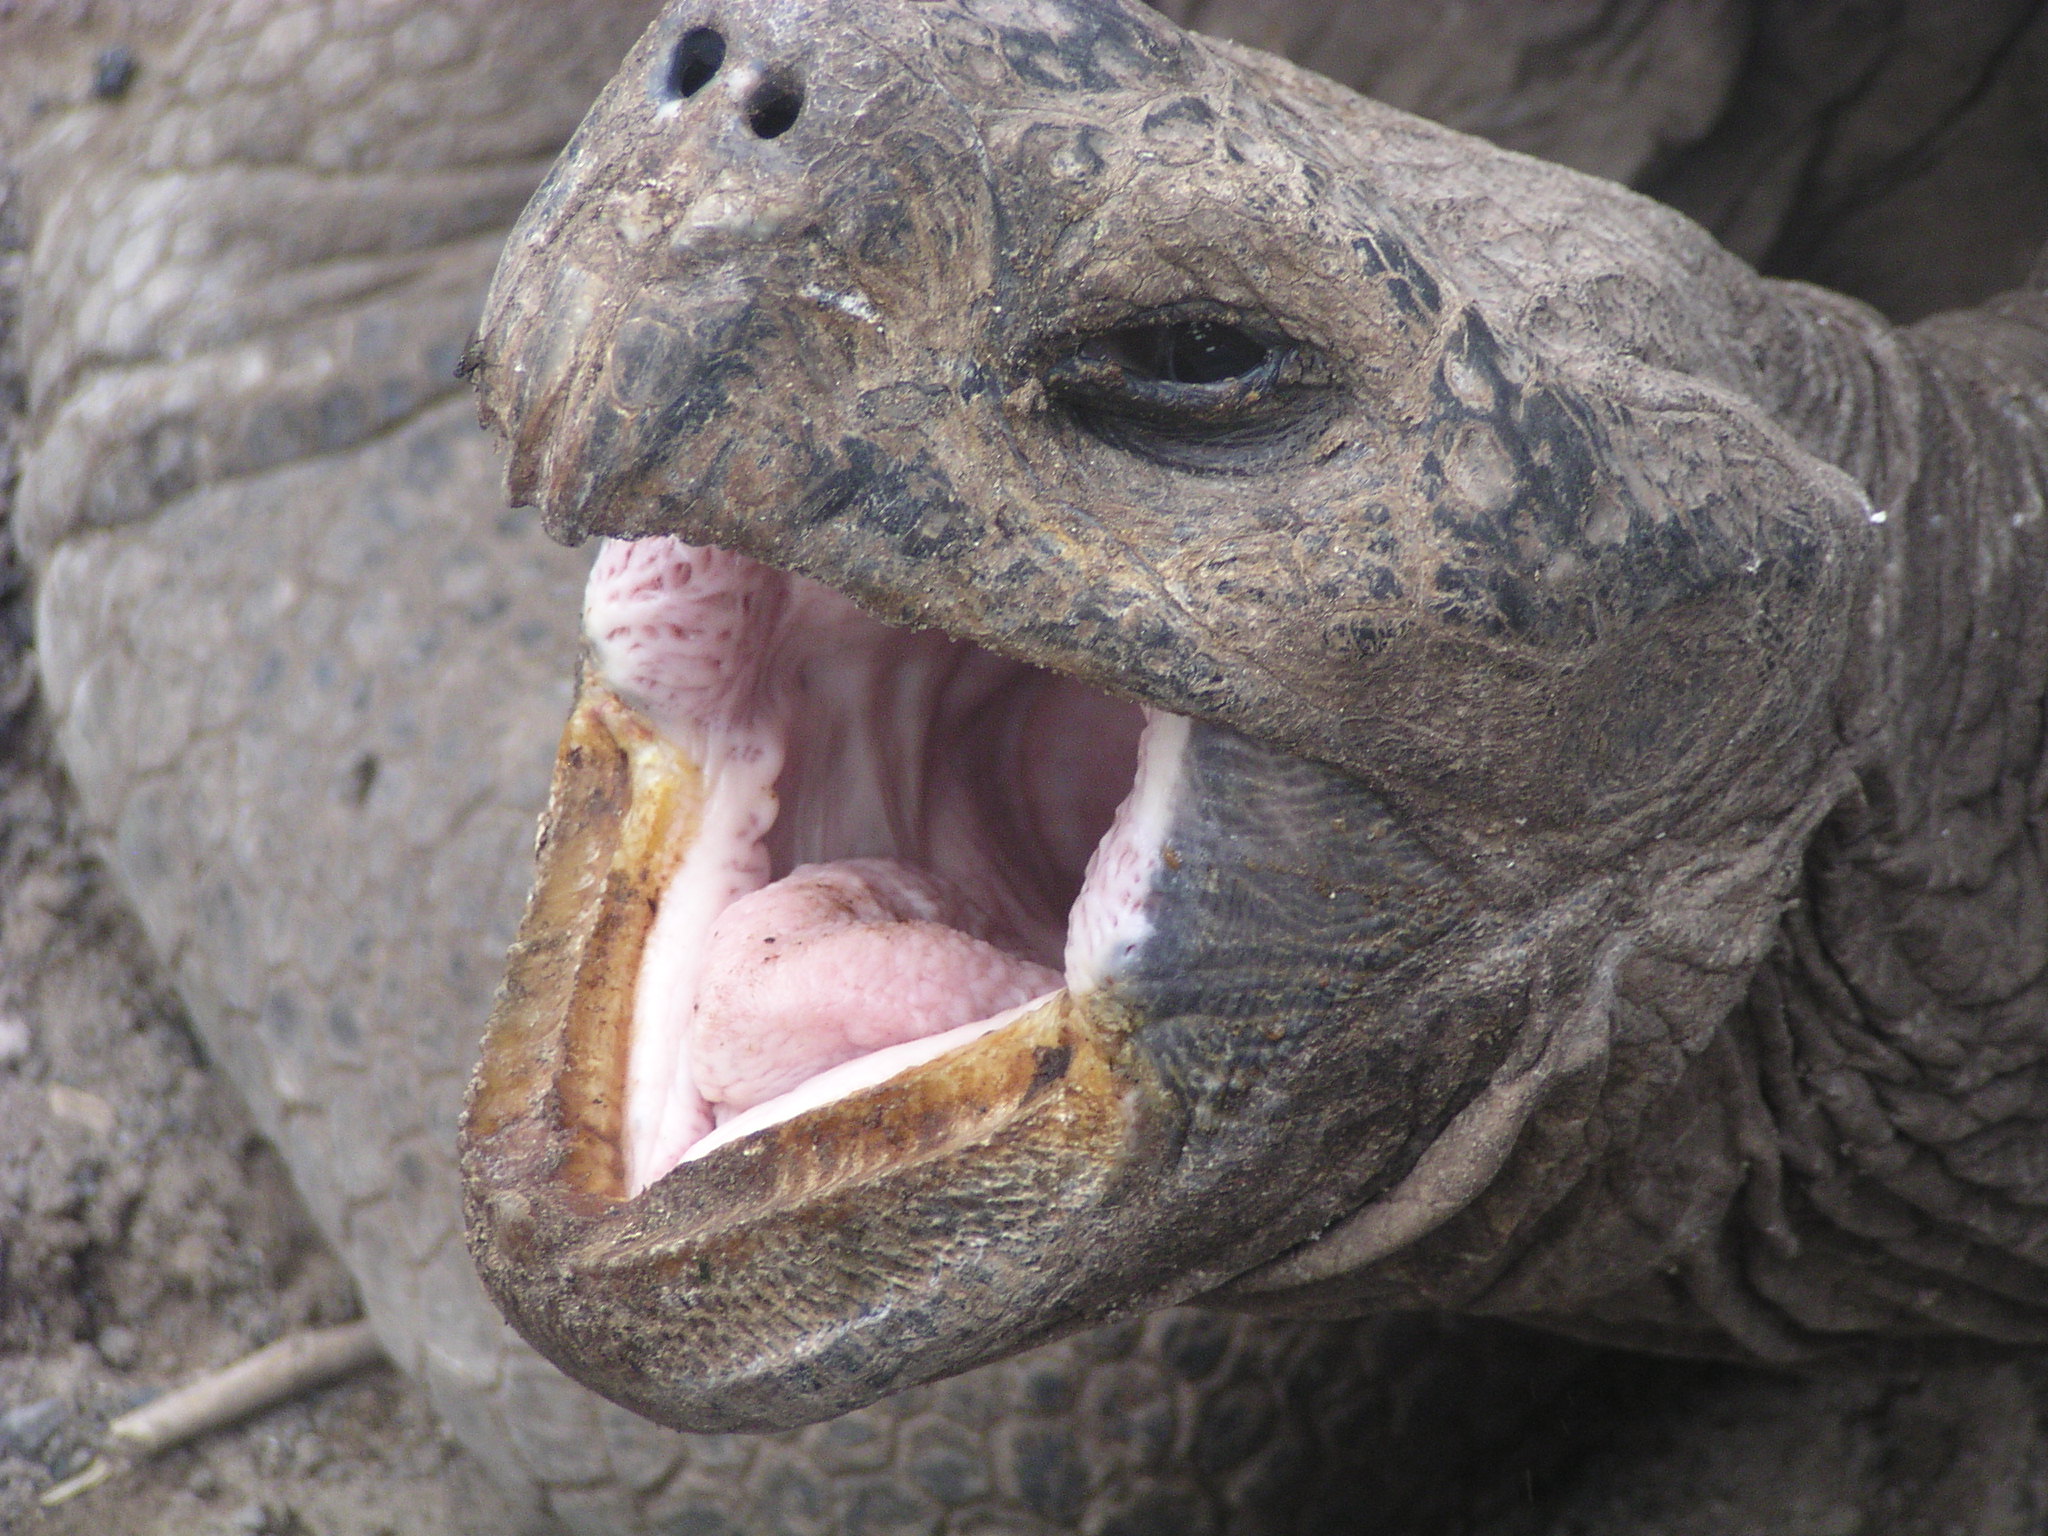 toothless tortoise - open fotos | free open source photos, public